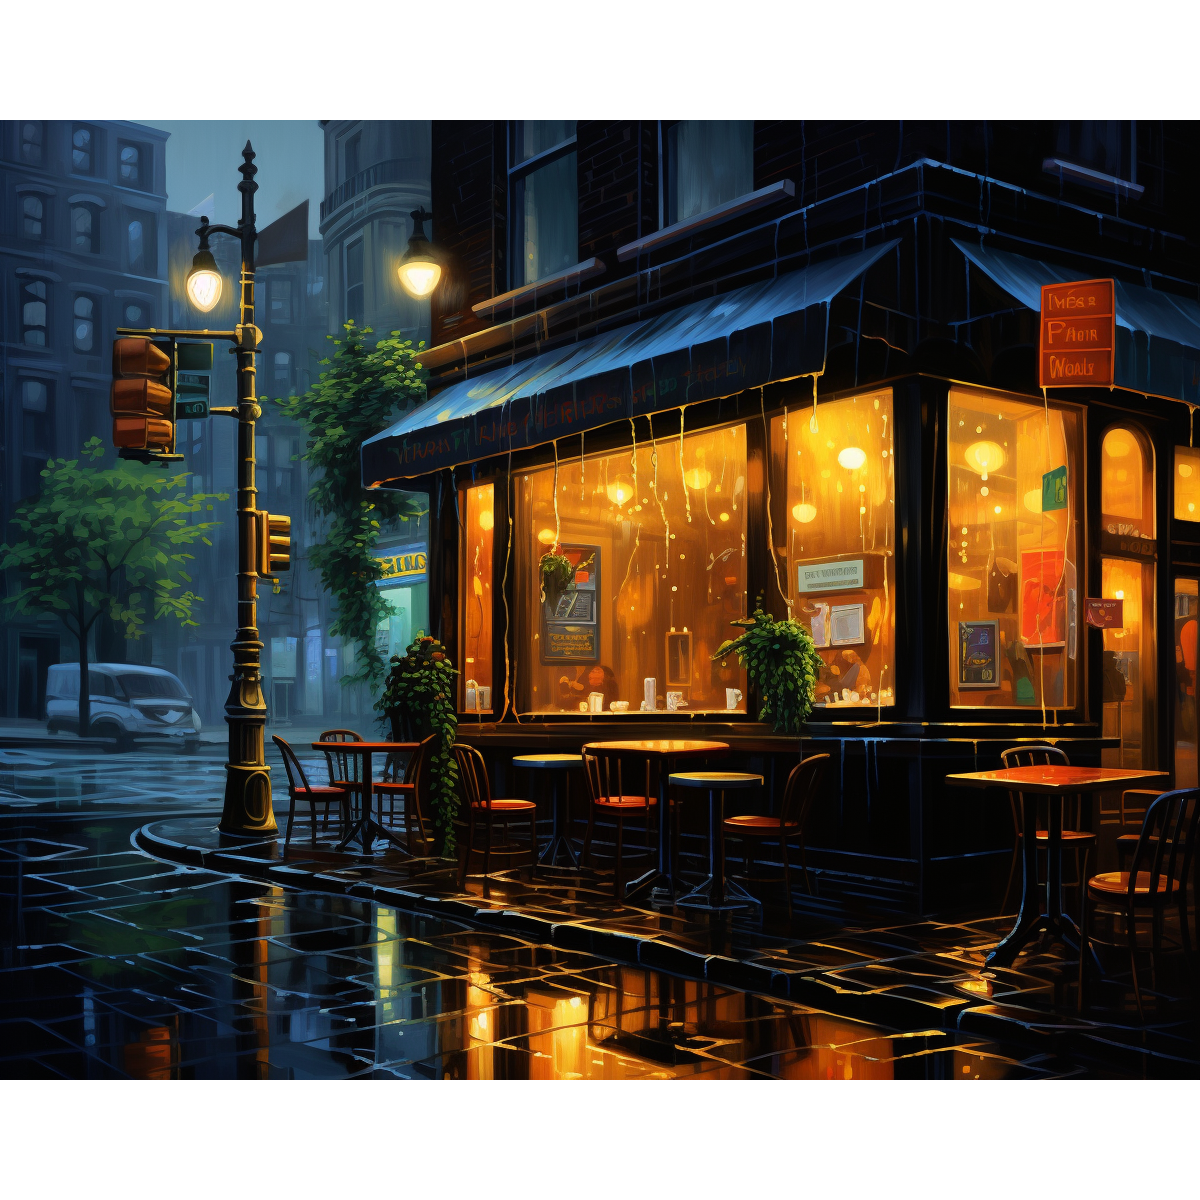 Rainy Coffee Shop